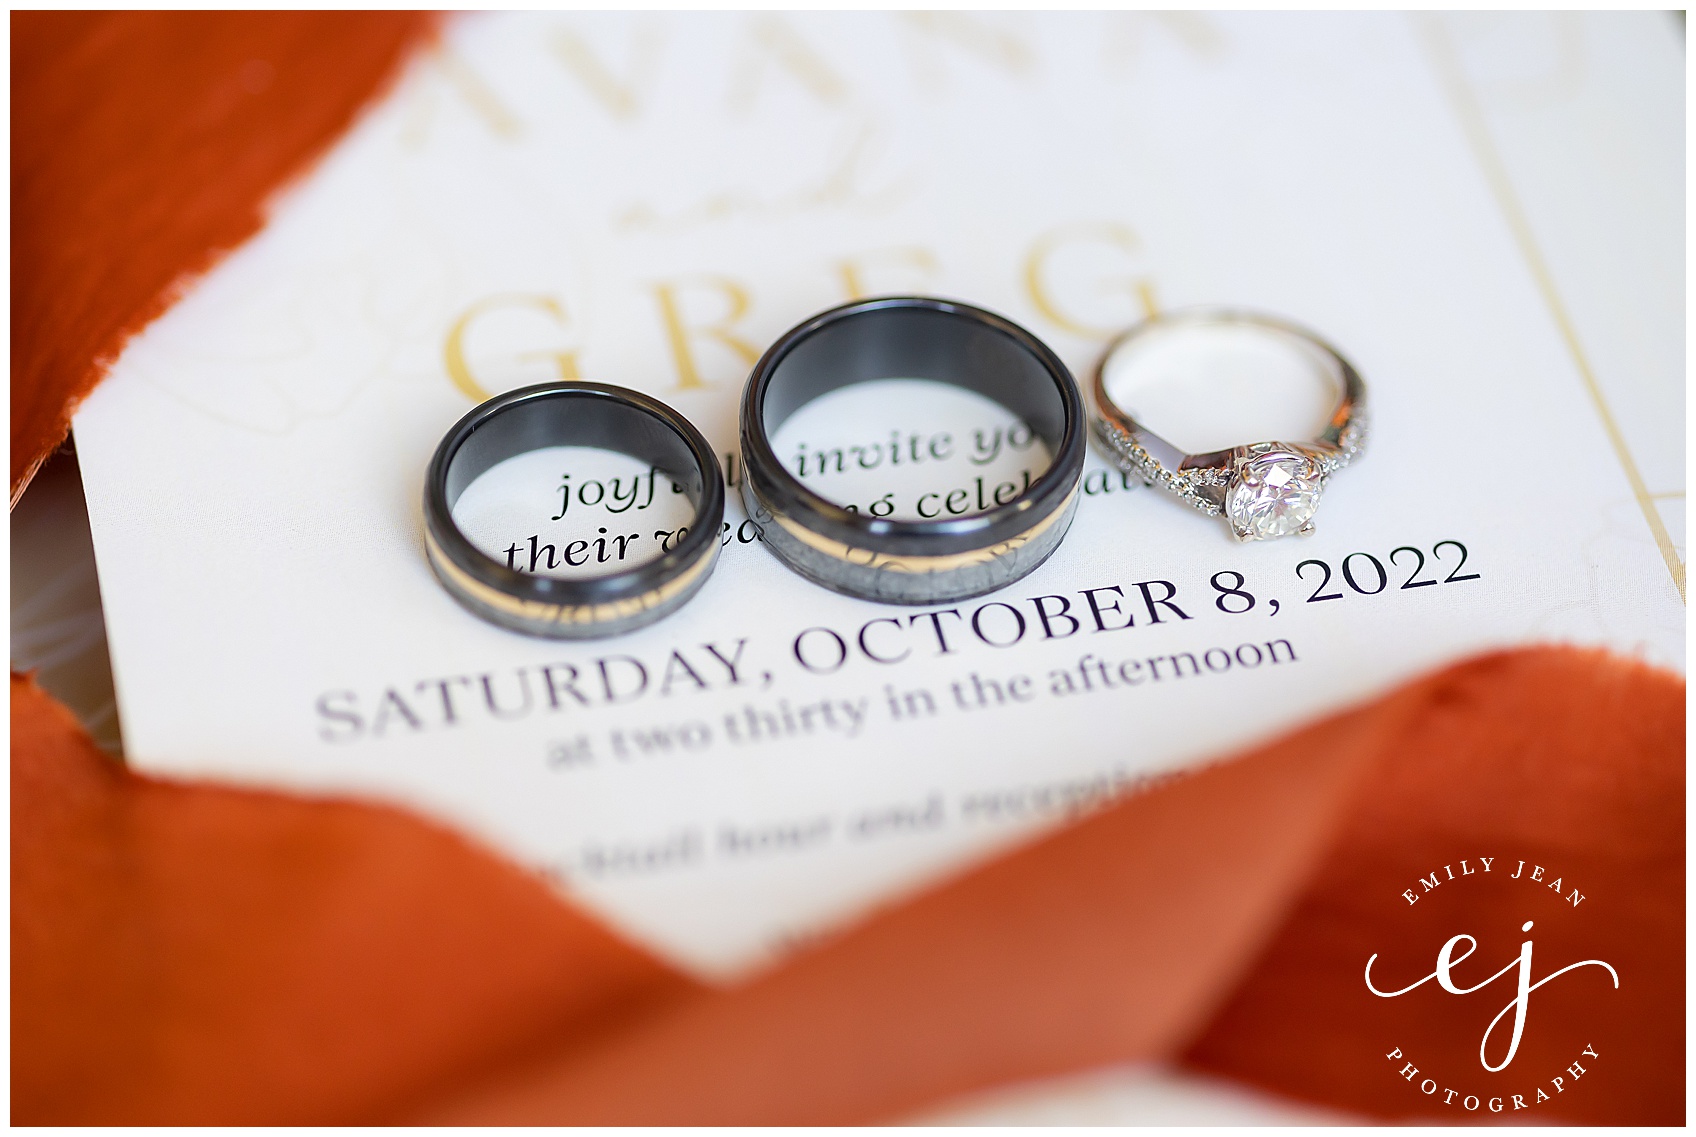 wedding rings and invitation with orange ribbon